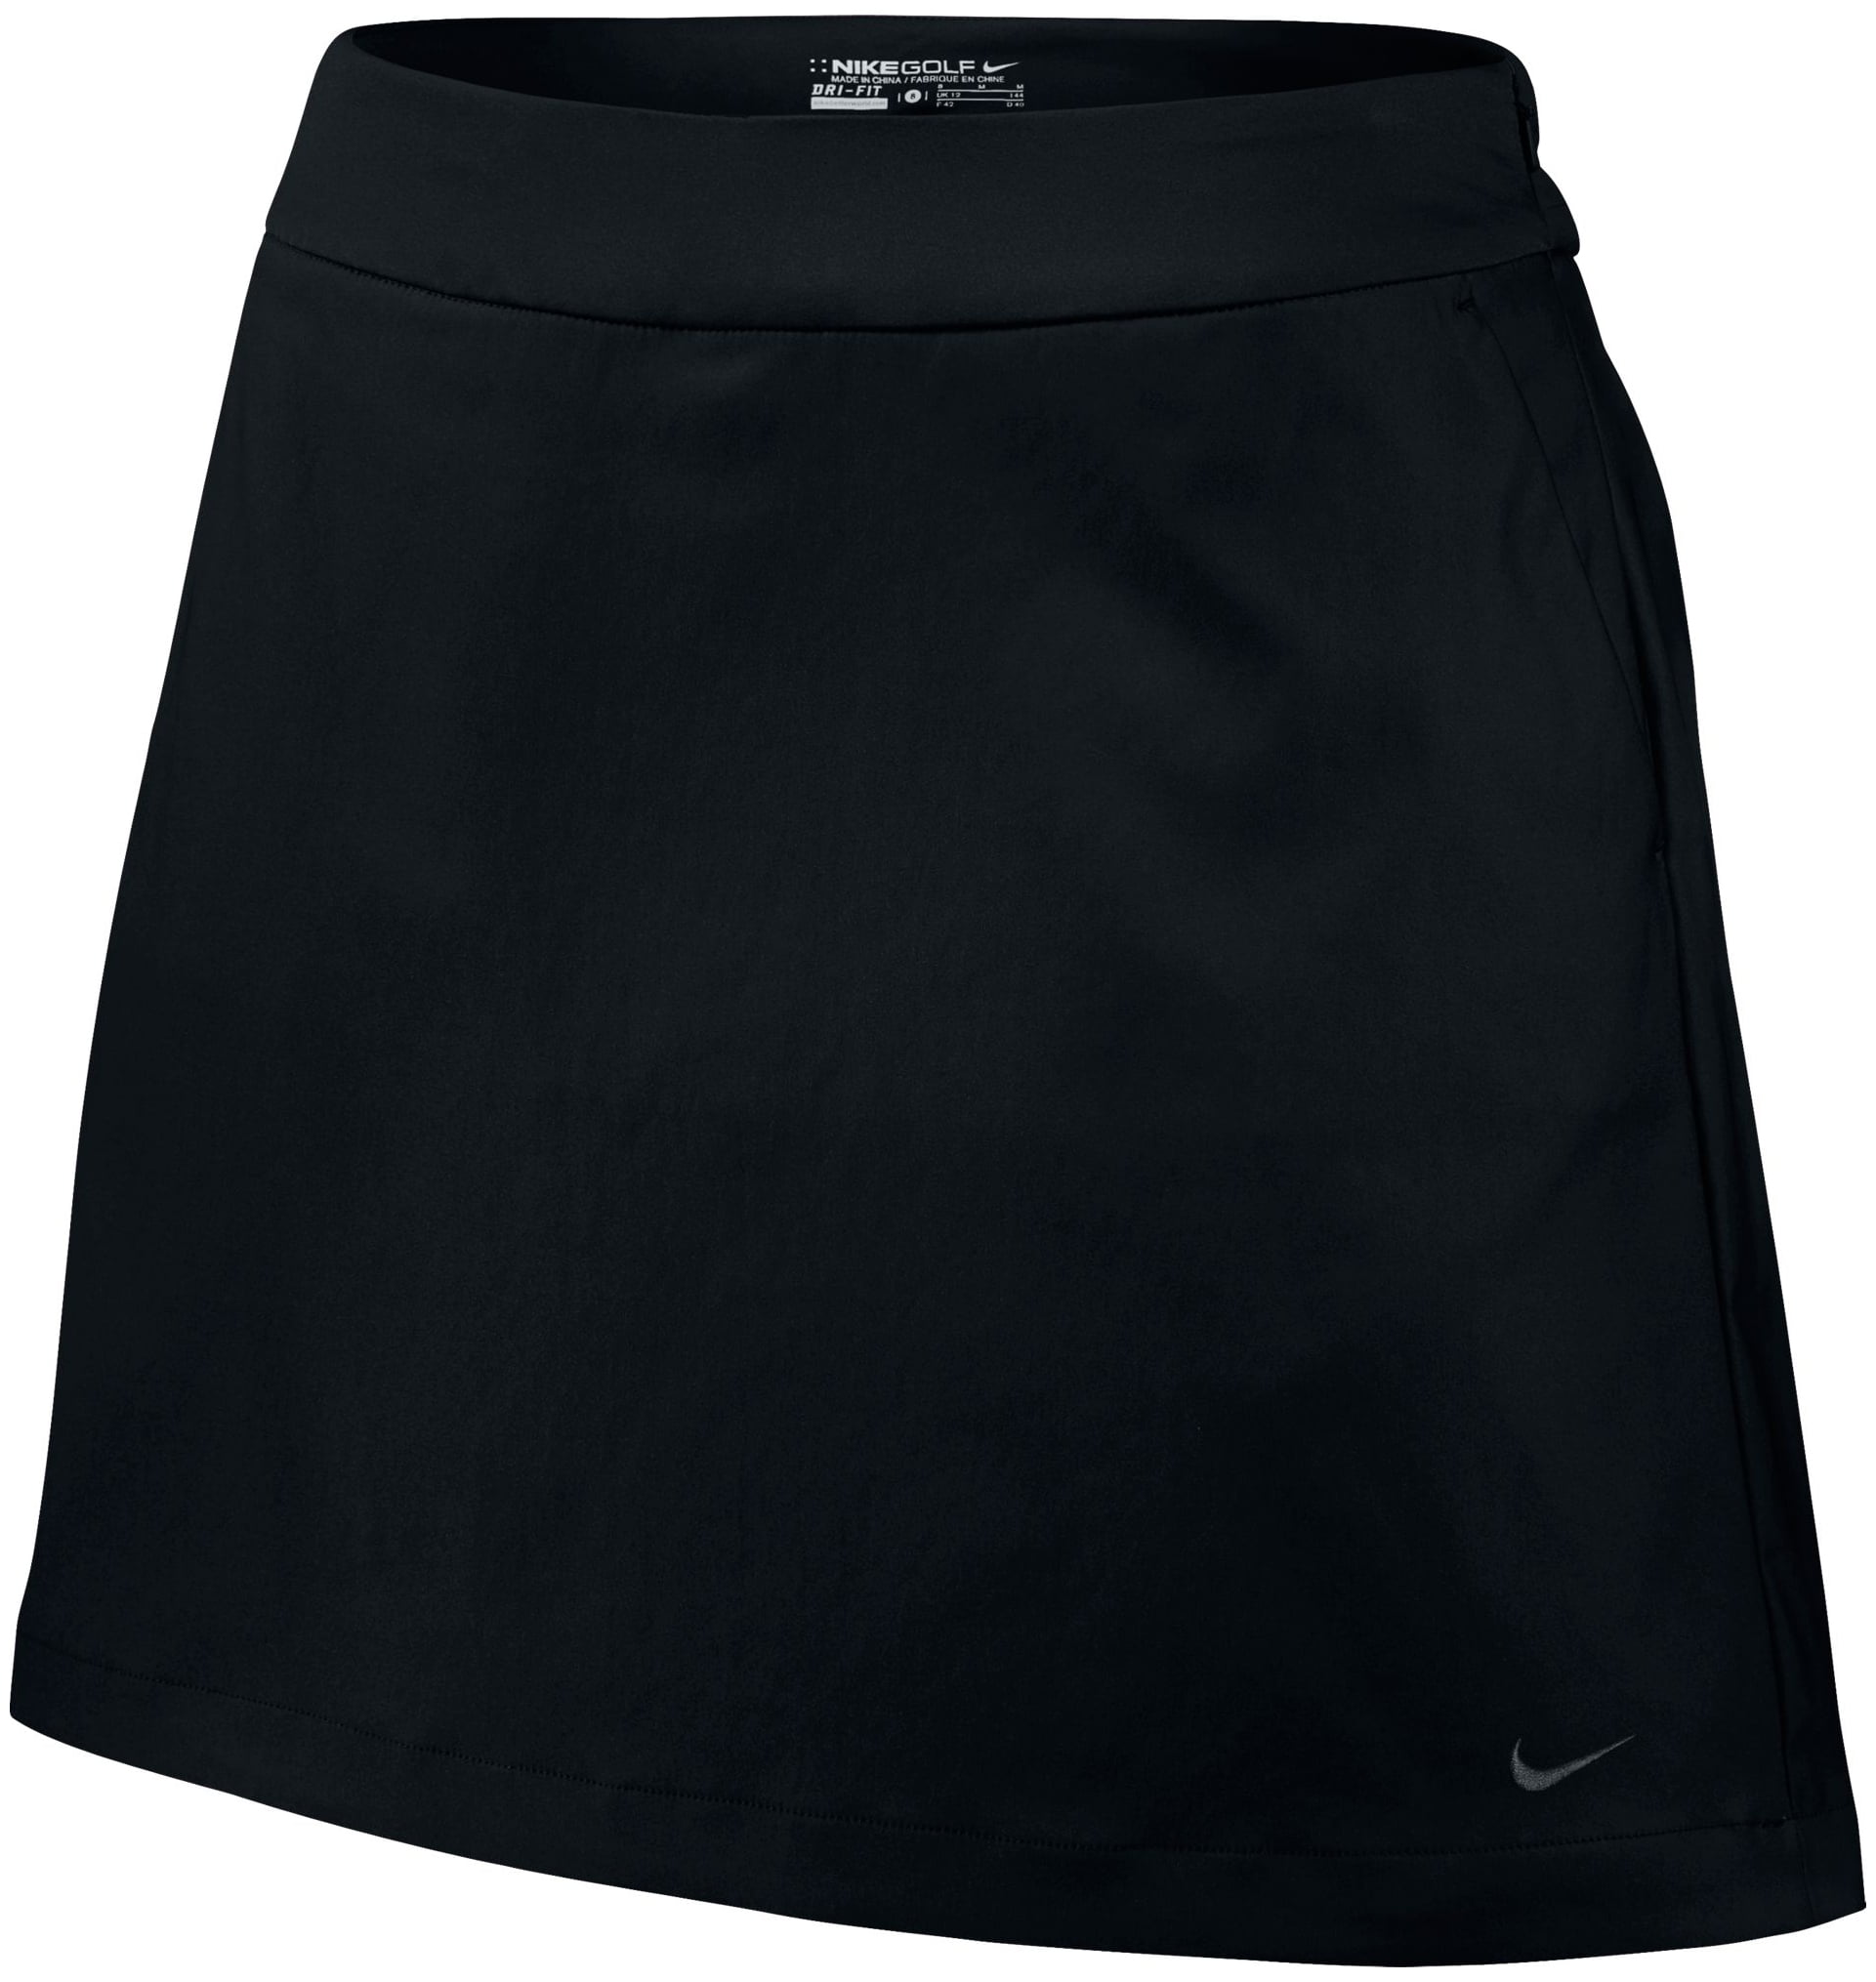 Nike Women's Tournament Golf Skort (Black, 6) - Walmart.com